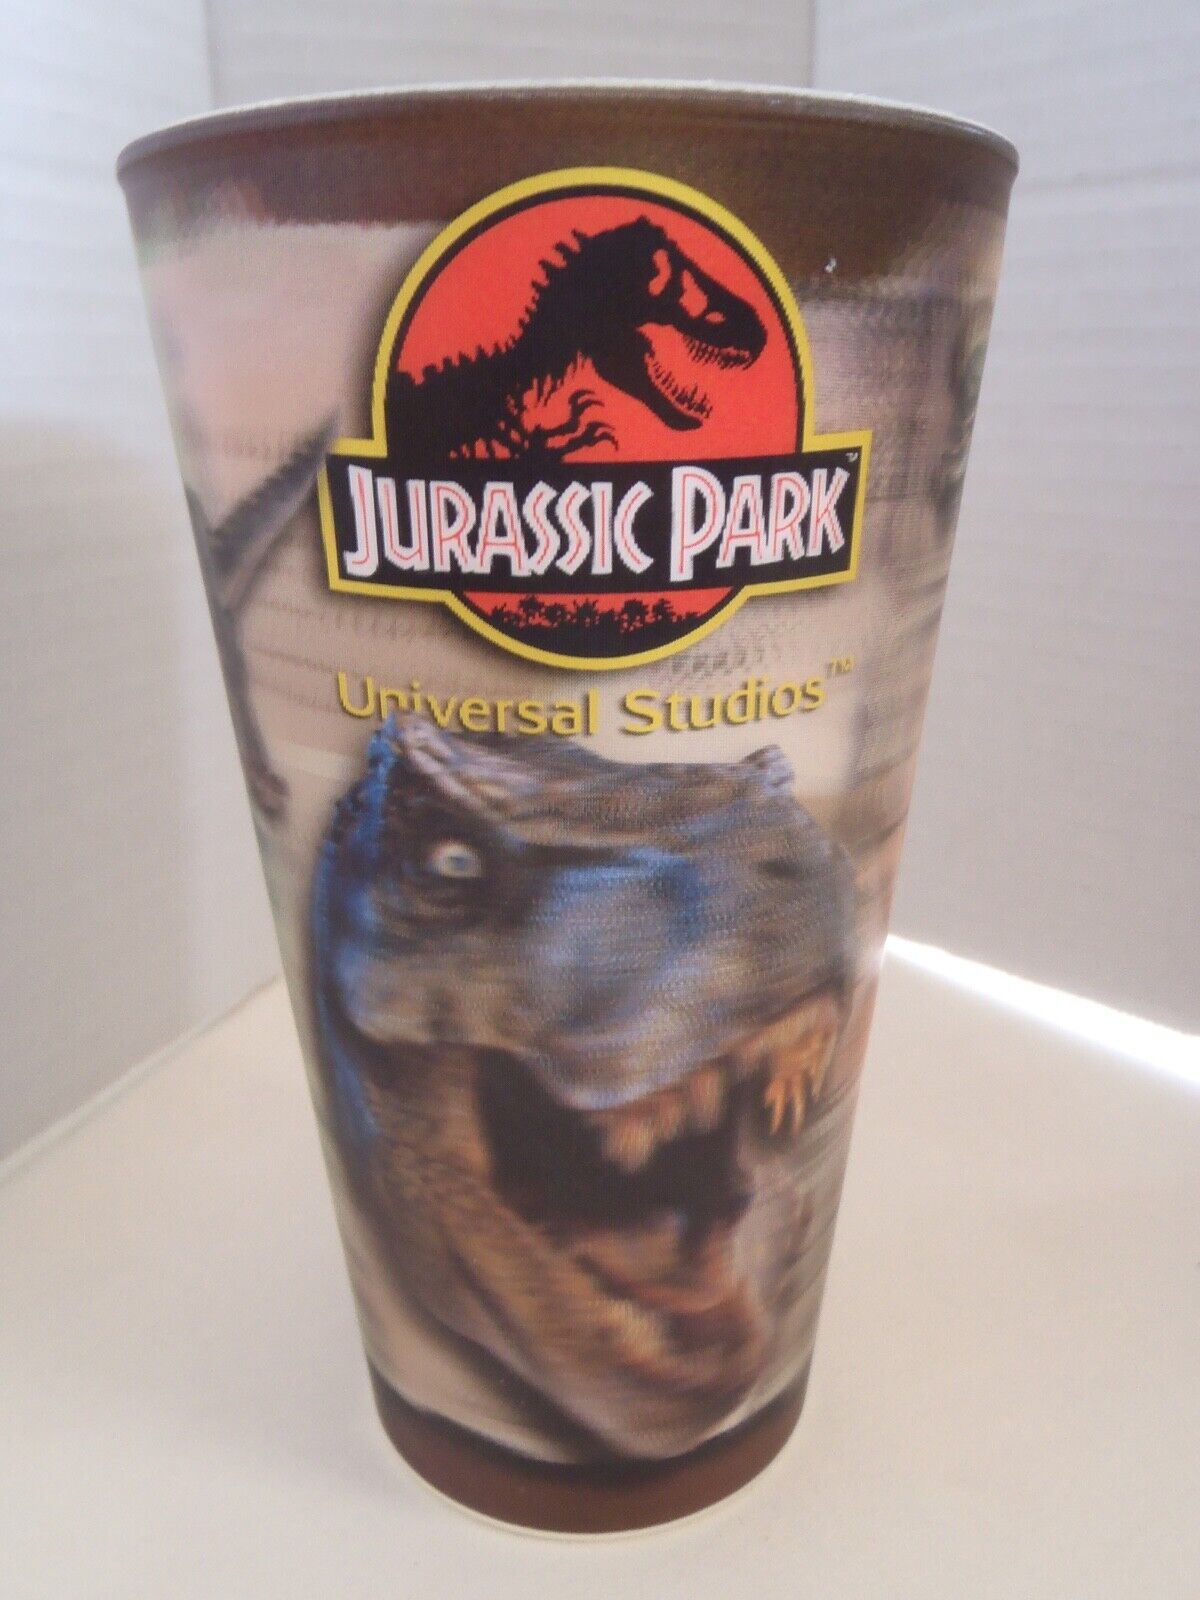 Jurassic Park Universal Studios Lenticular Holographic 3D Plastic Cup Tumblr